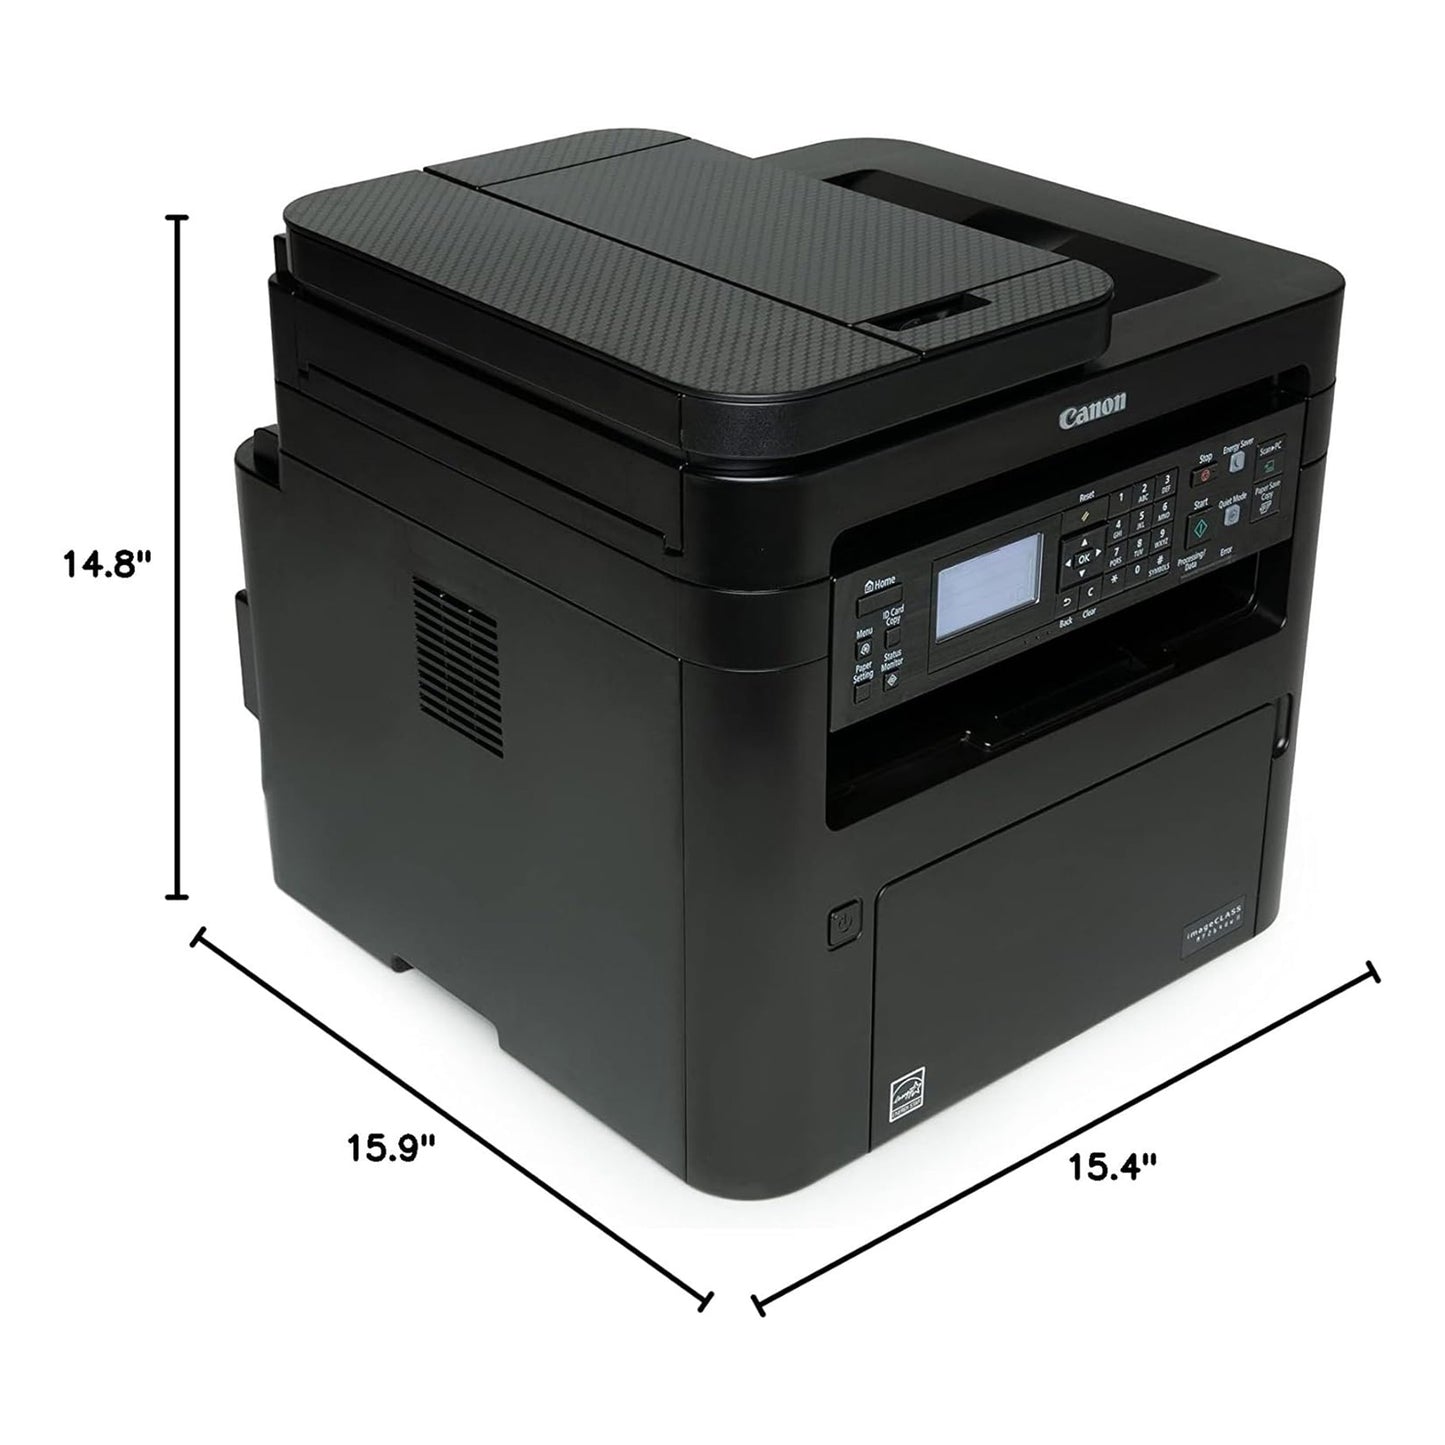 Canon imageCLASS MF264dw II Wireless Monochrome Laser Printer, Print, Copy and Scan, Auto Document Feeder, Black